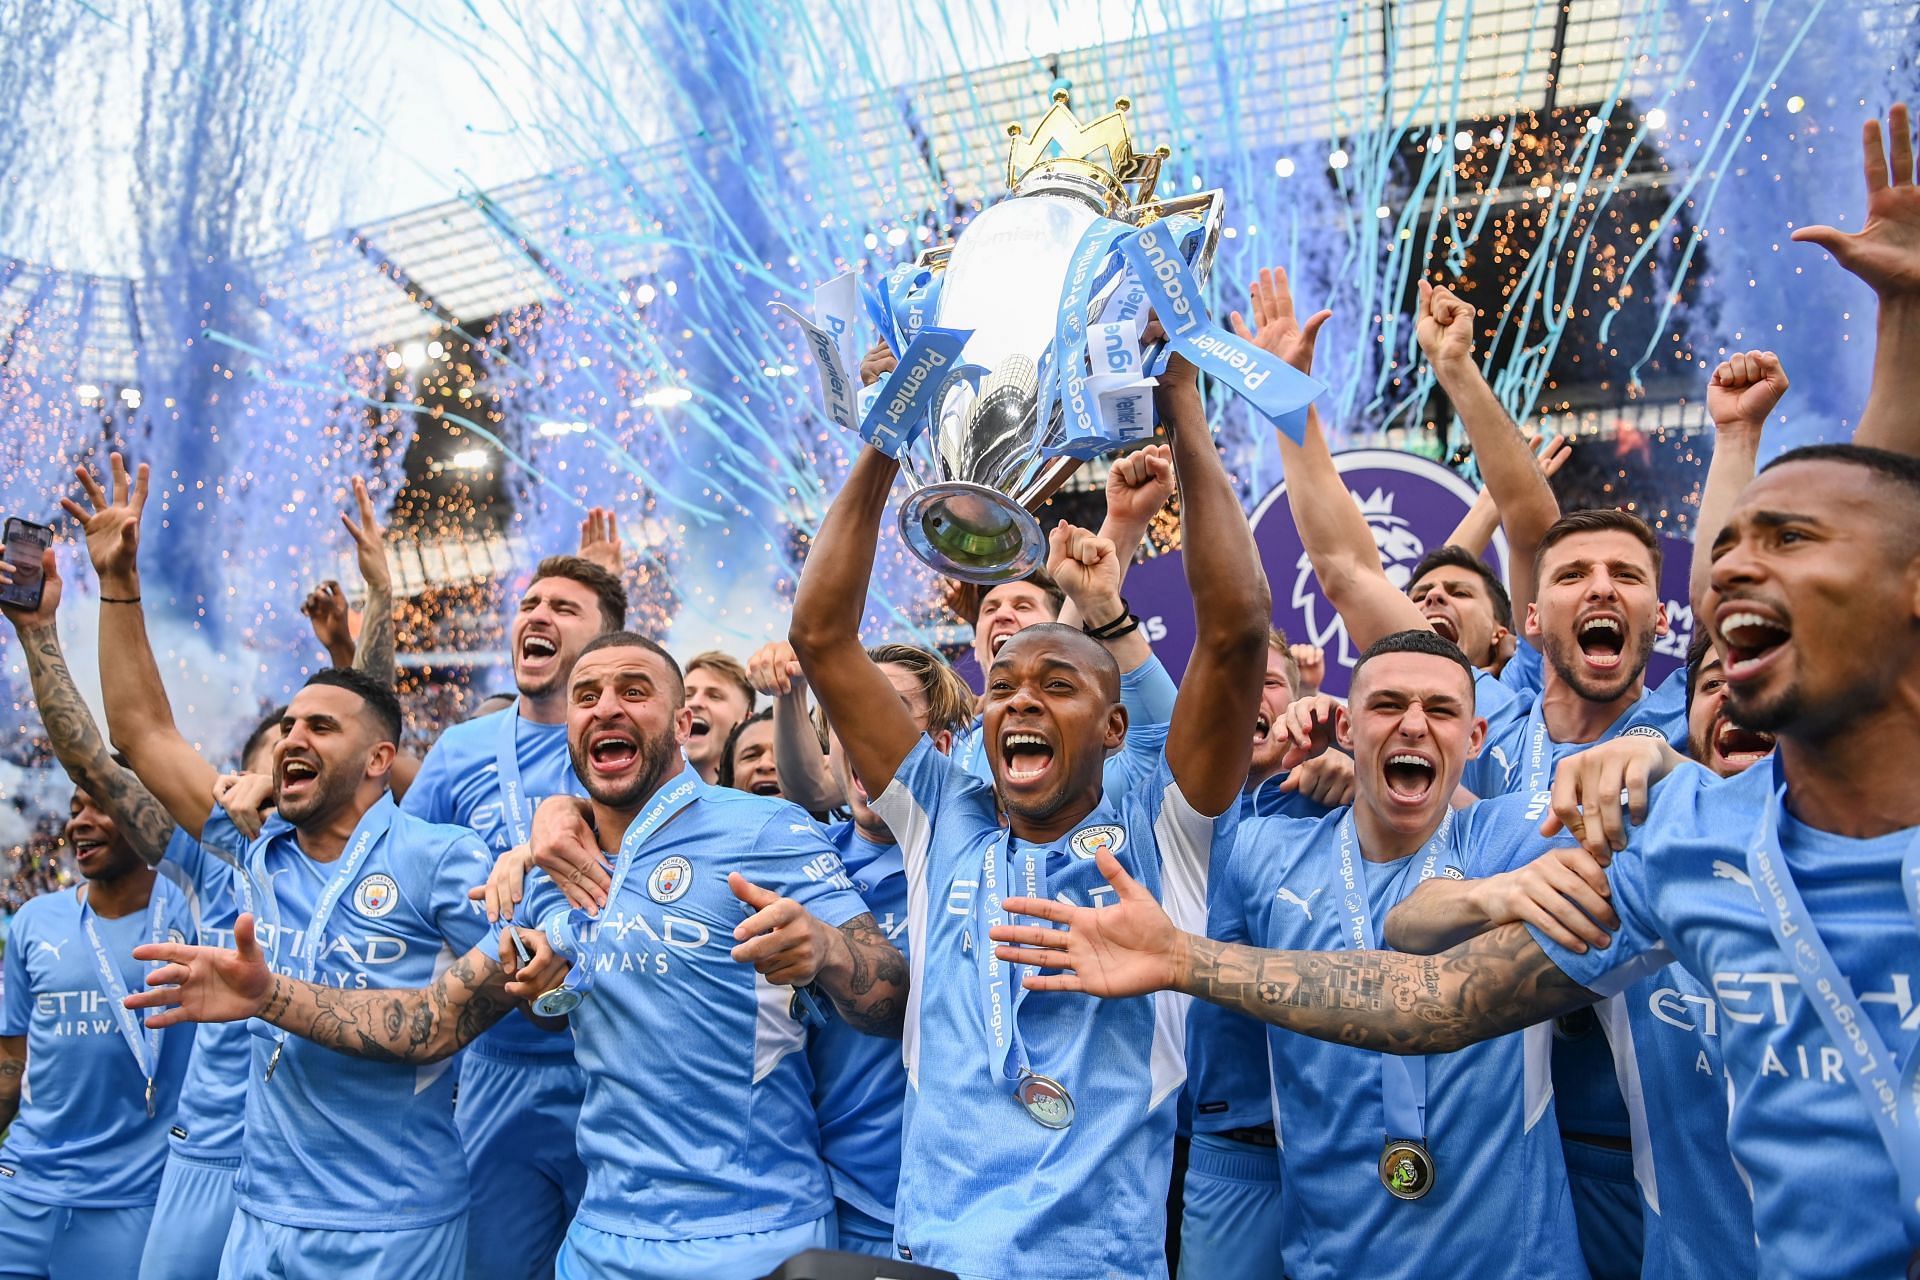 Manchester City won the EPL title last season